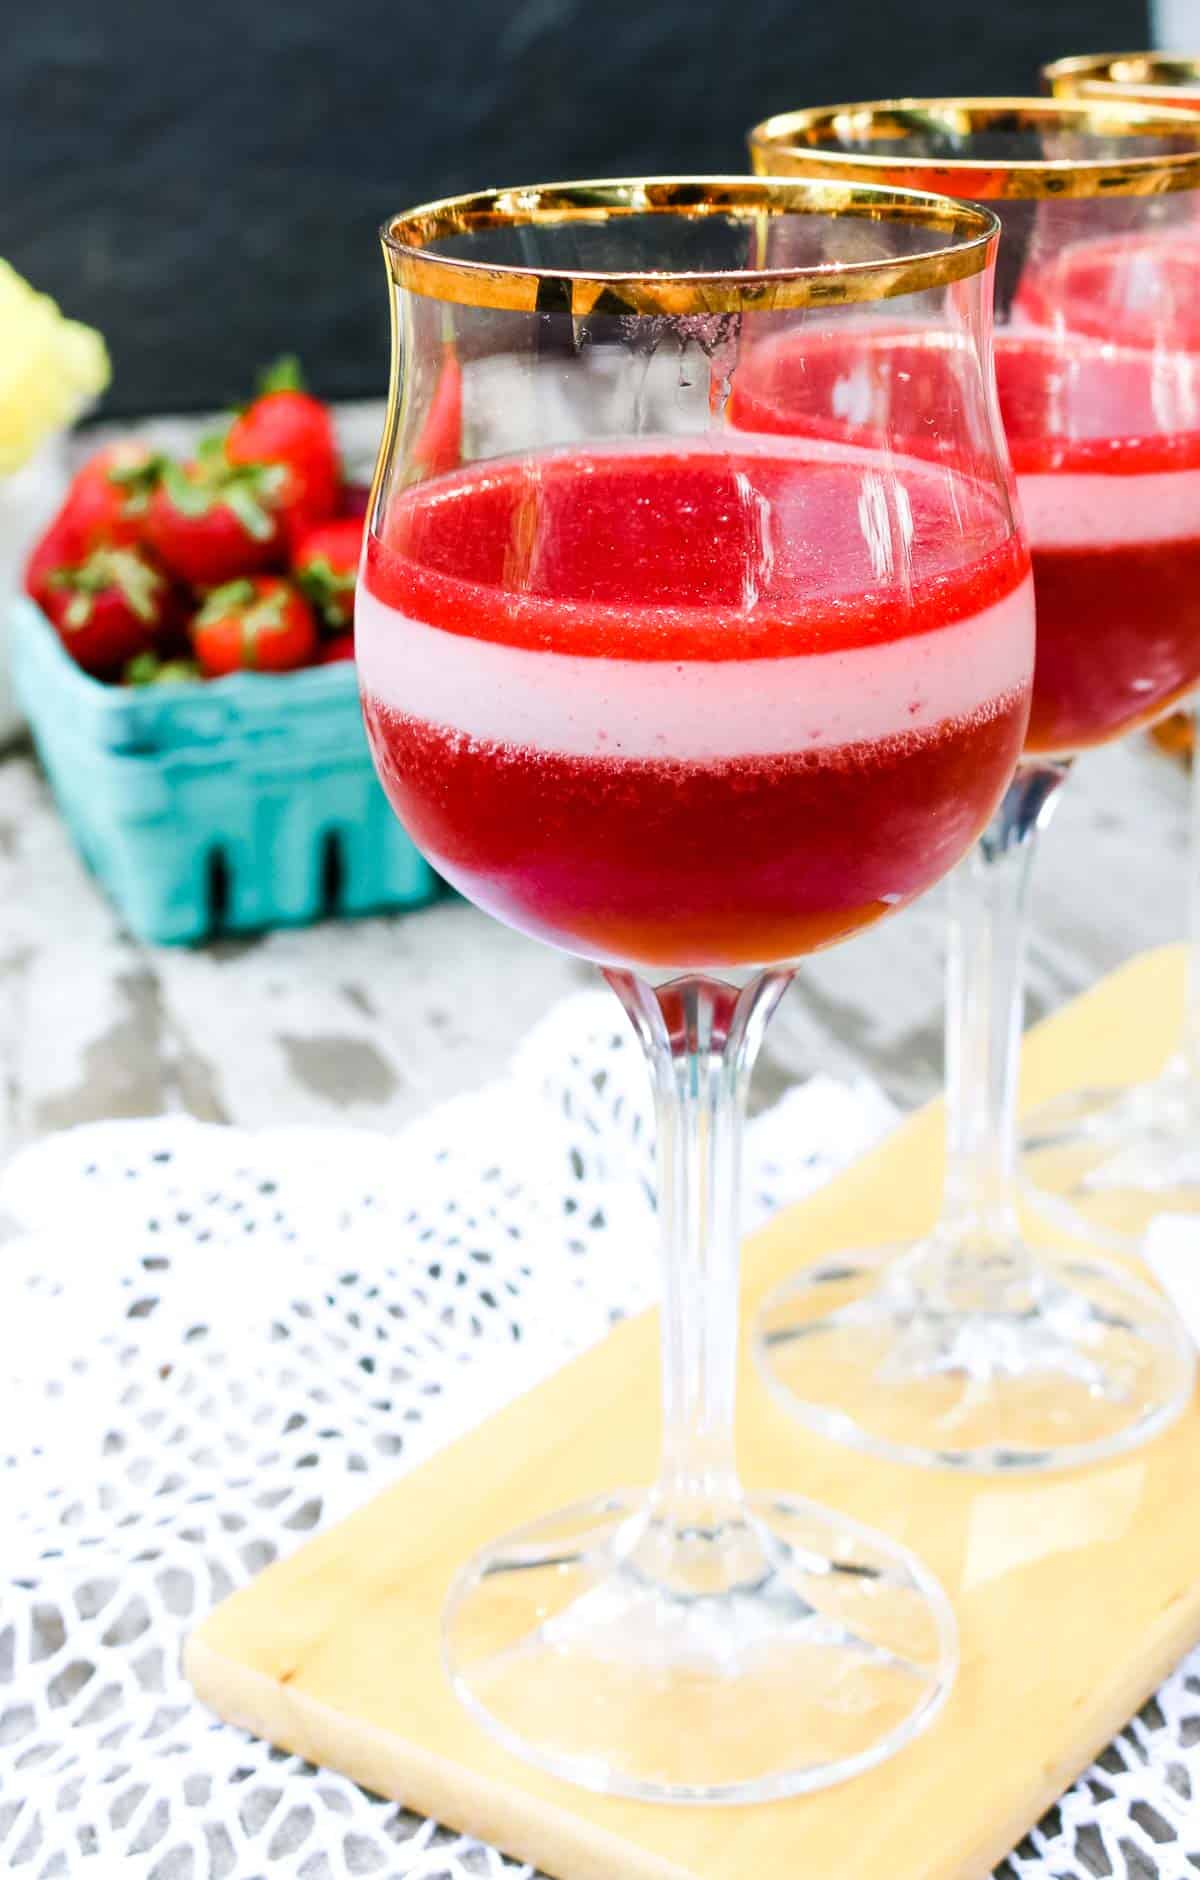 Homemade strawberry jello and cream-yogurt gelatin in the middle layer in a wine glass. 